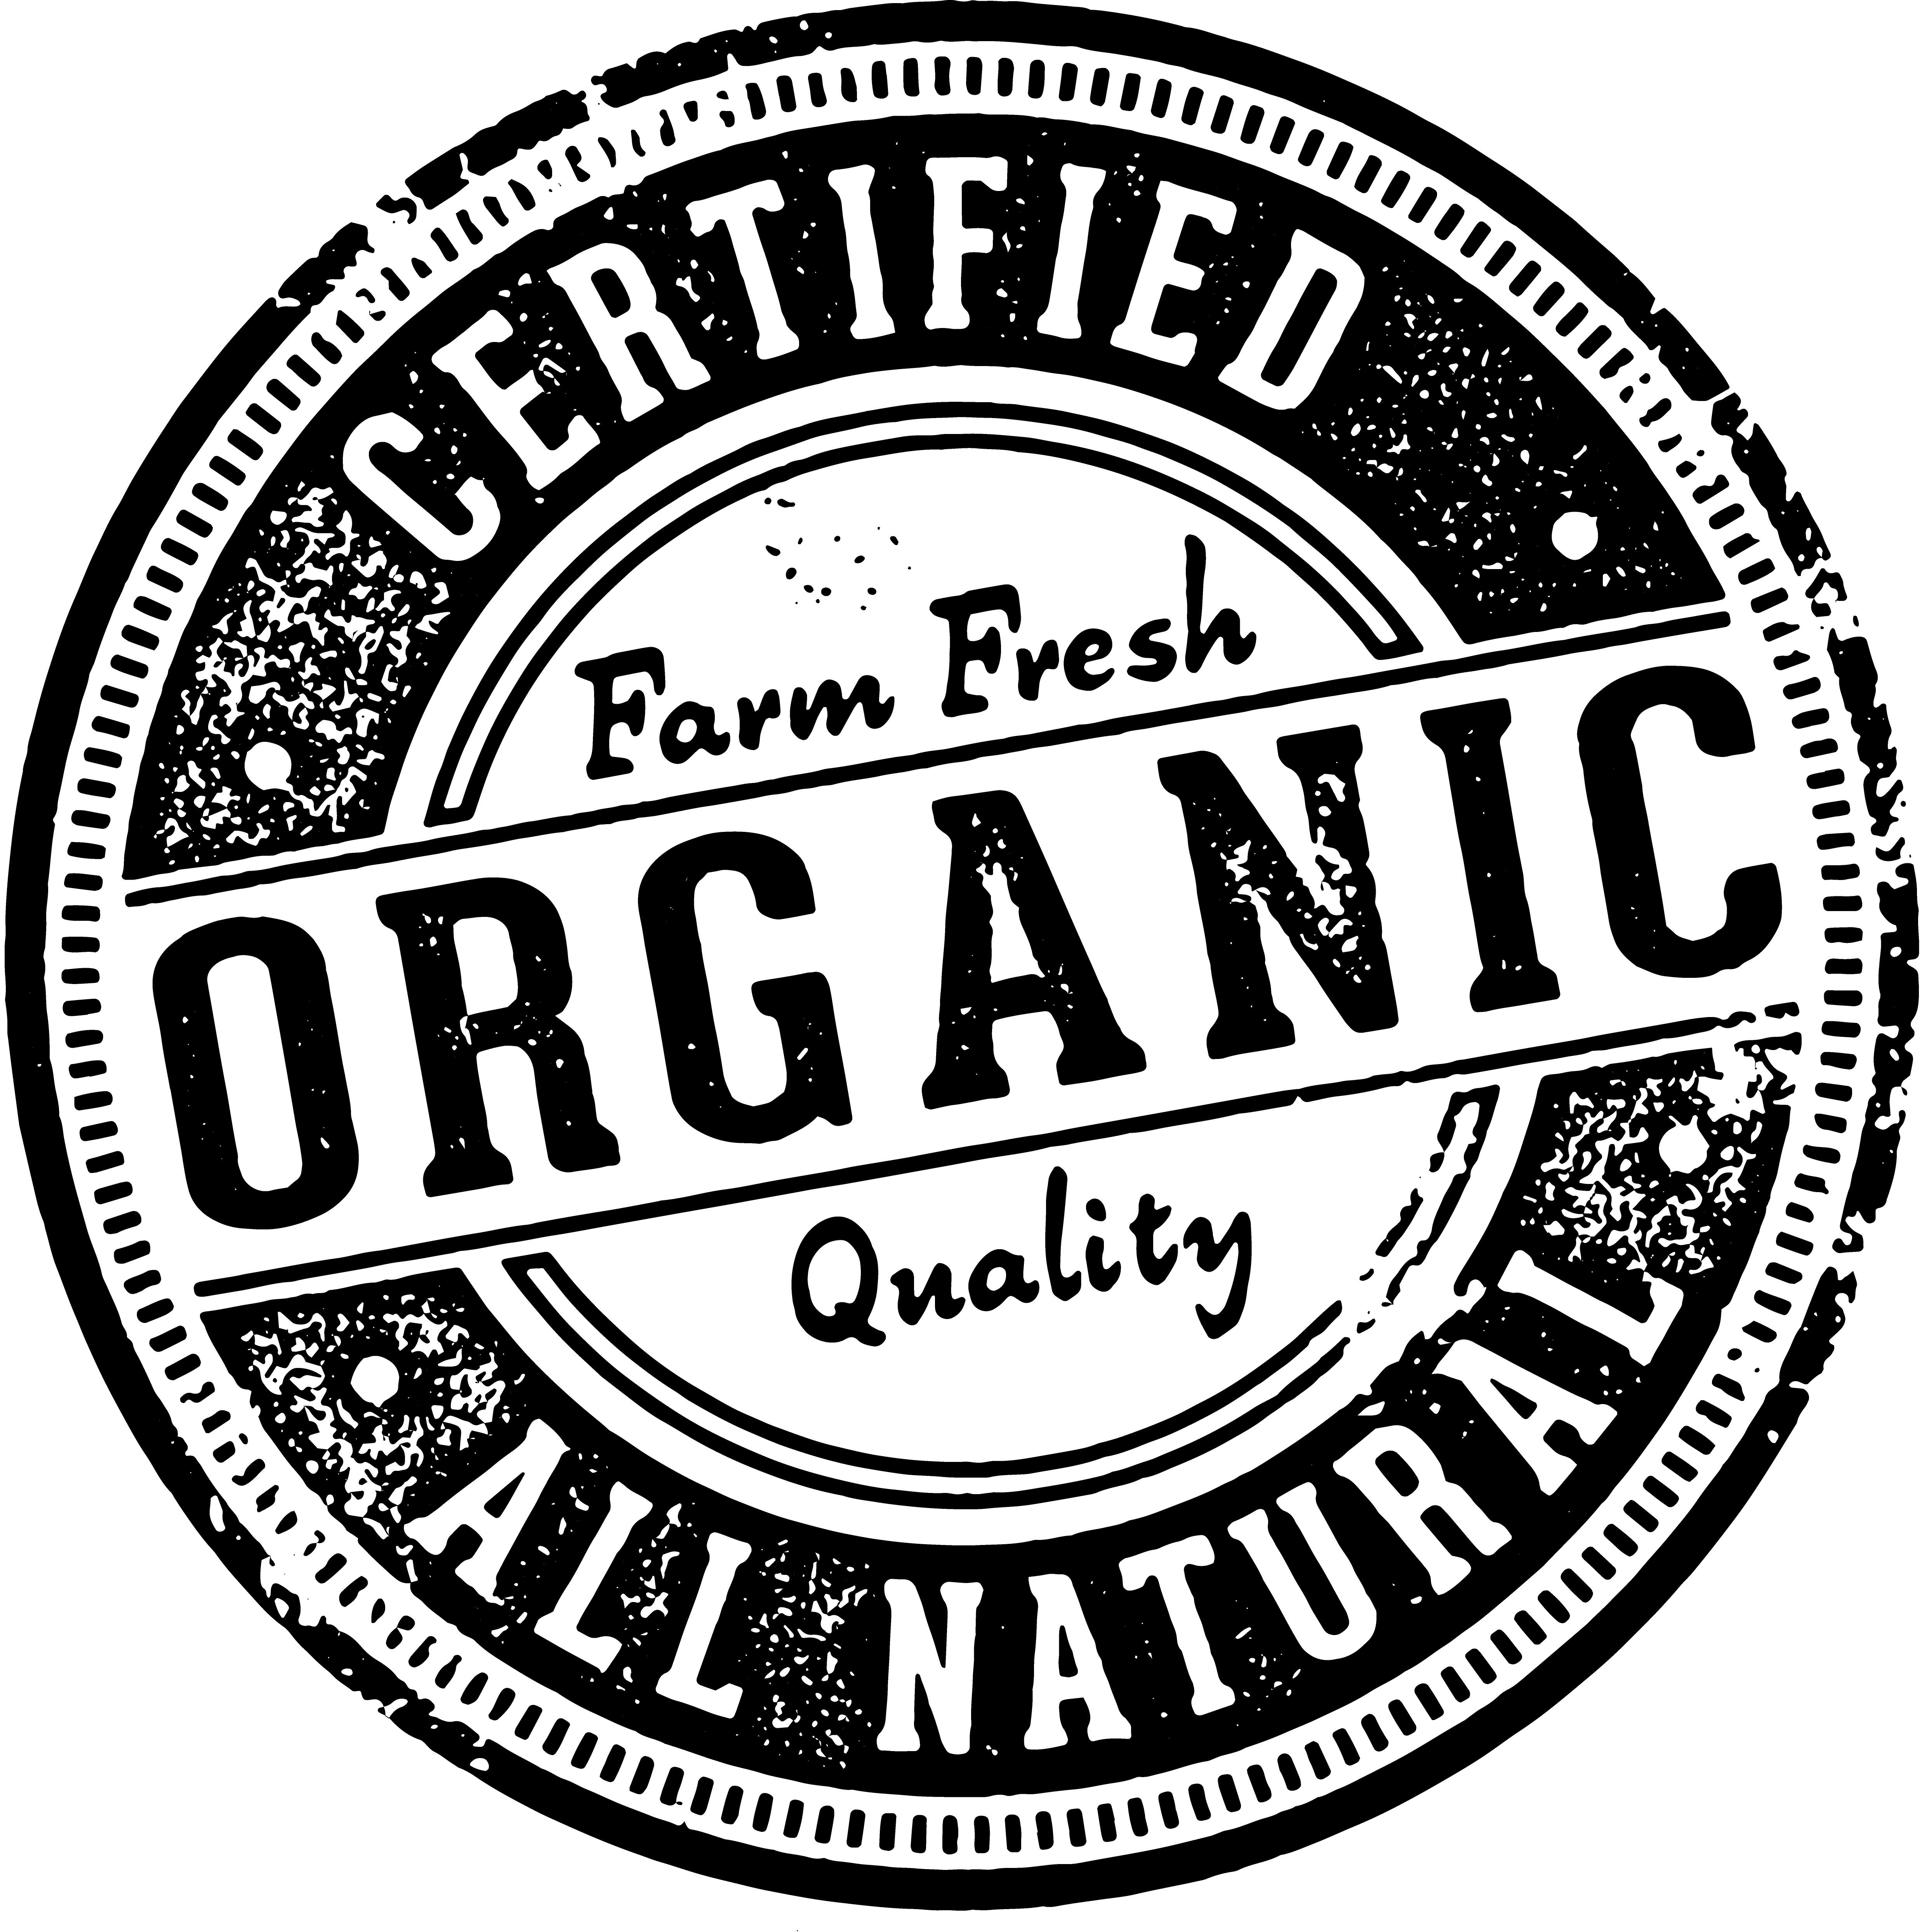 Organic food growing in natural soil